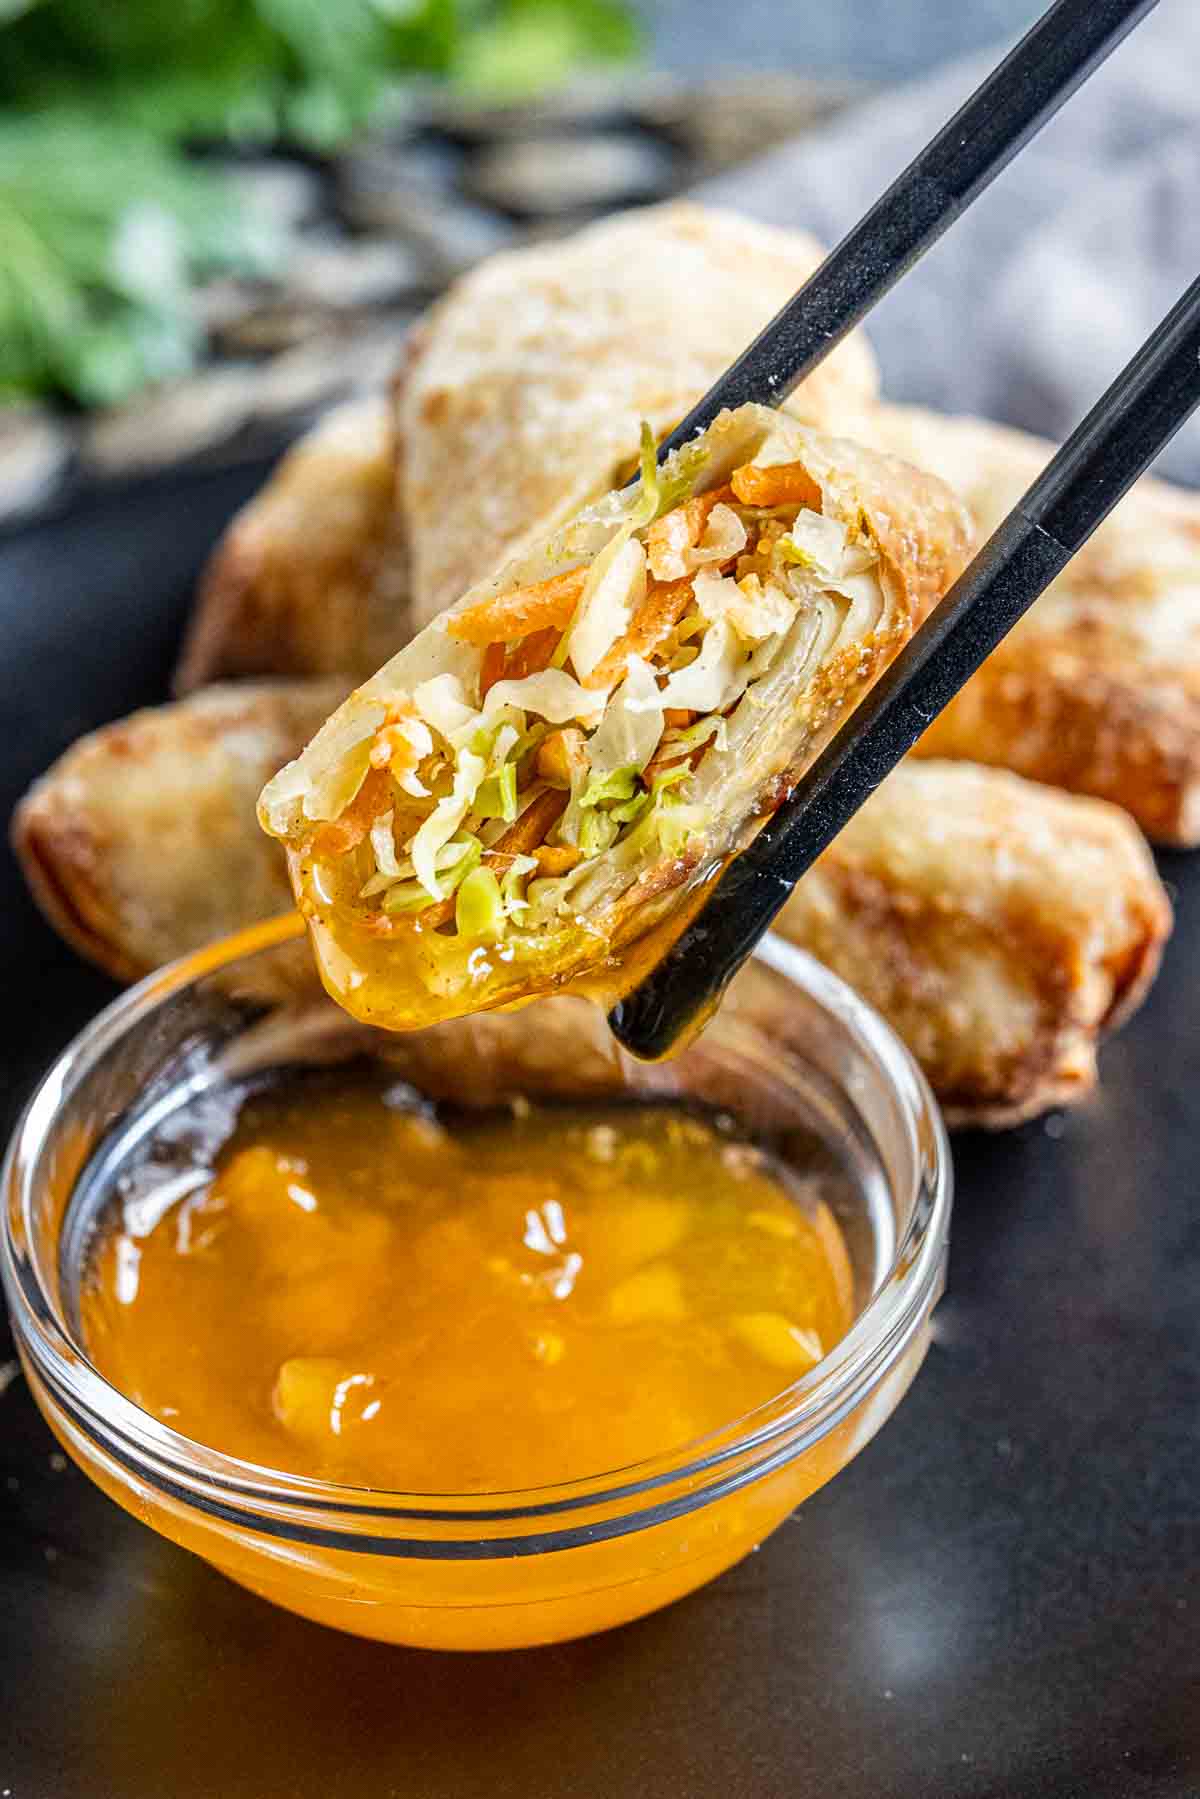 Chopsticks holding an egg roll and dipping Air Fryer Egg Rolls in duck sauce